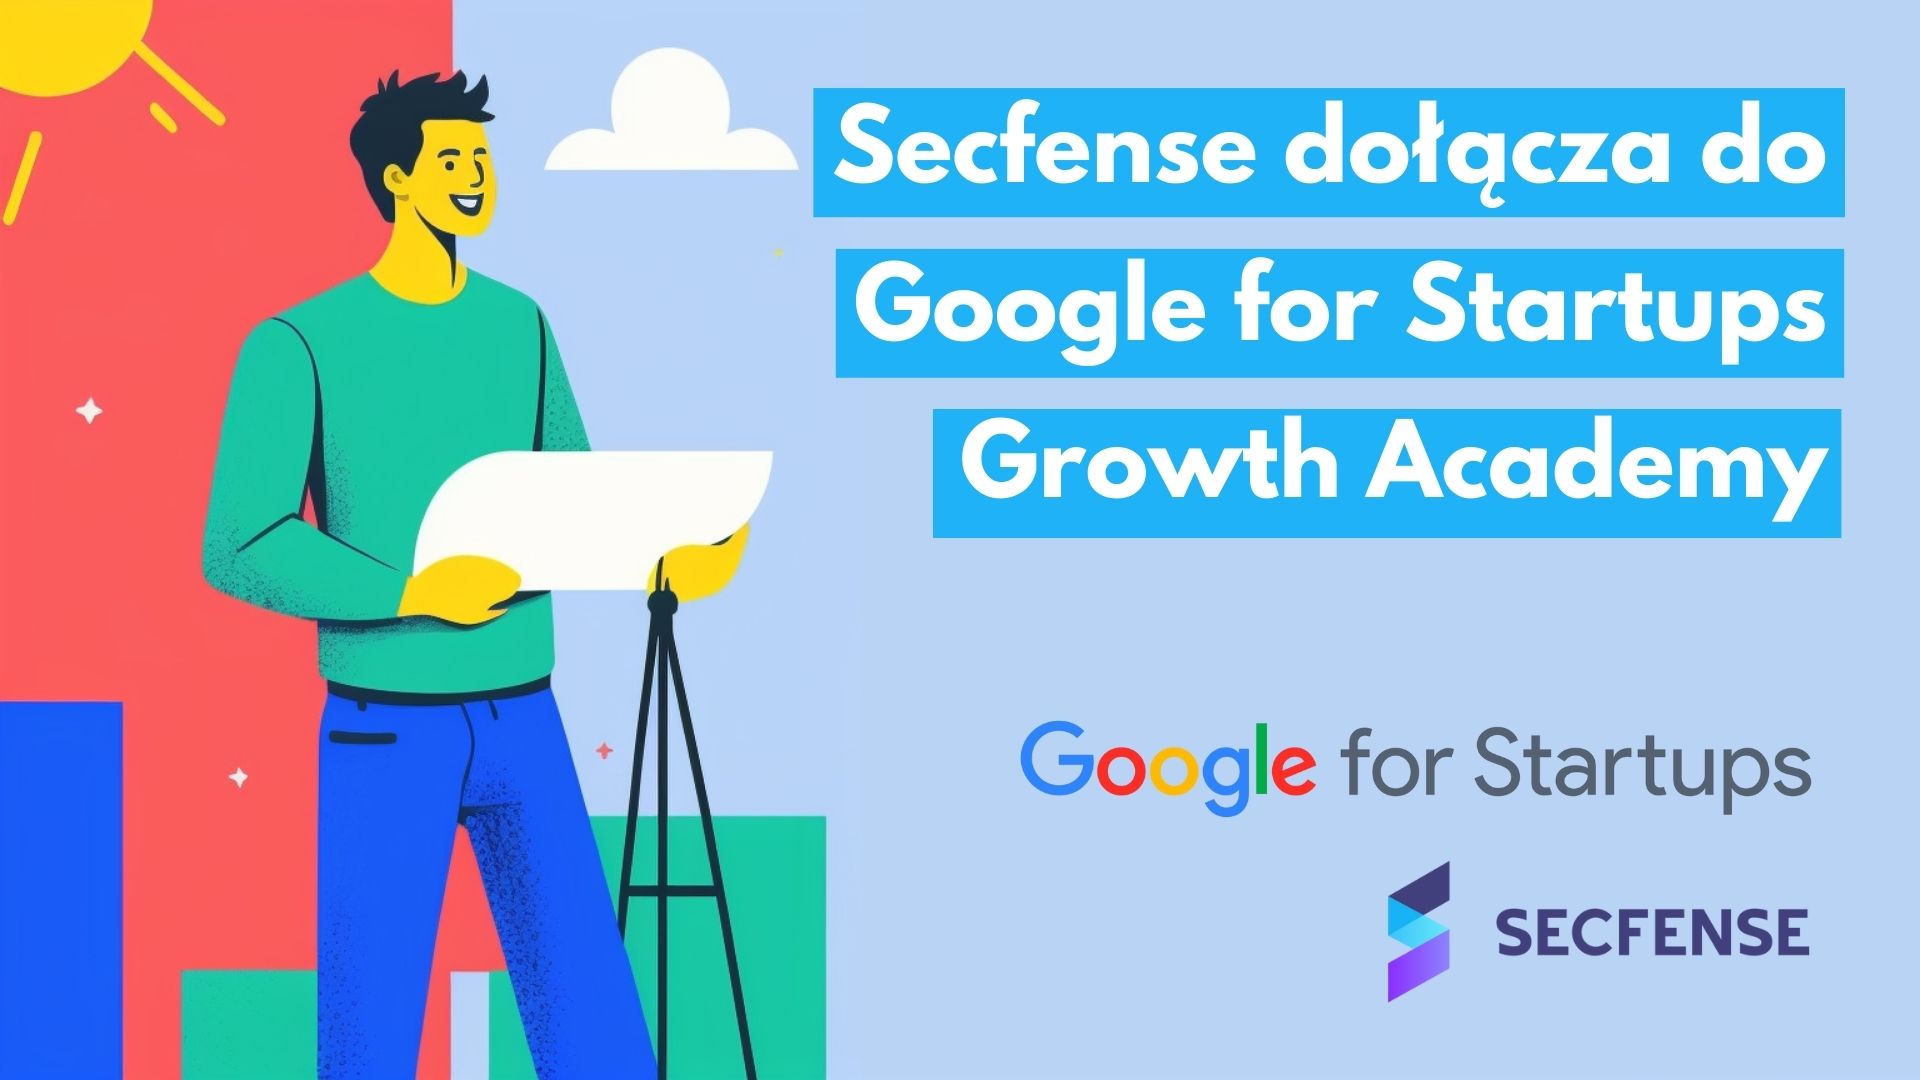 Secfense dolacza do Google for Startups Growth Academy 01